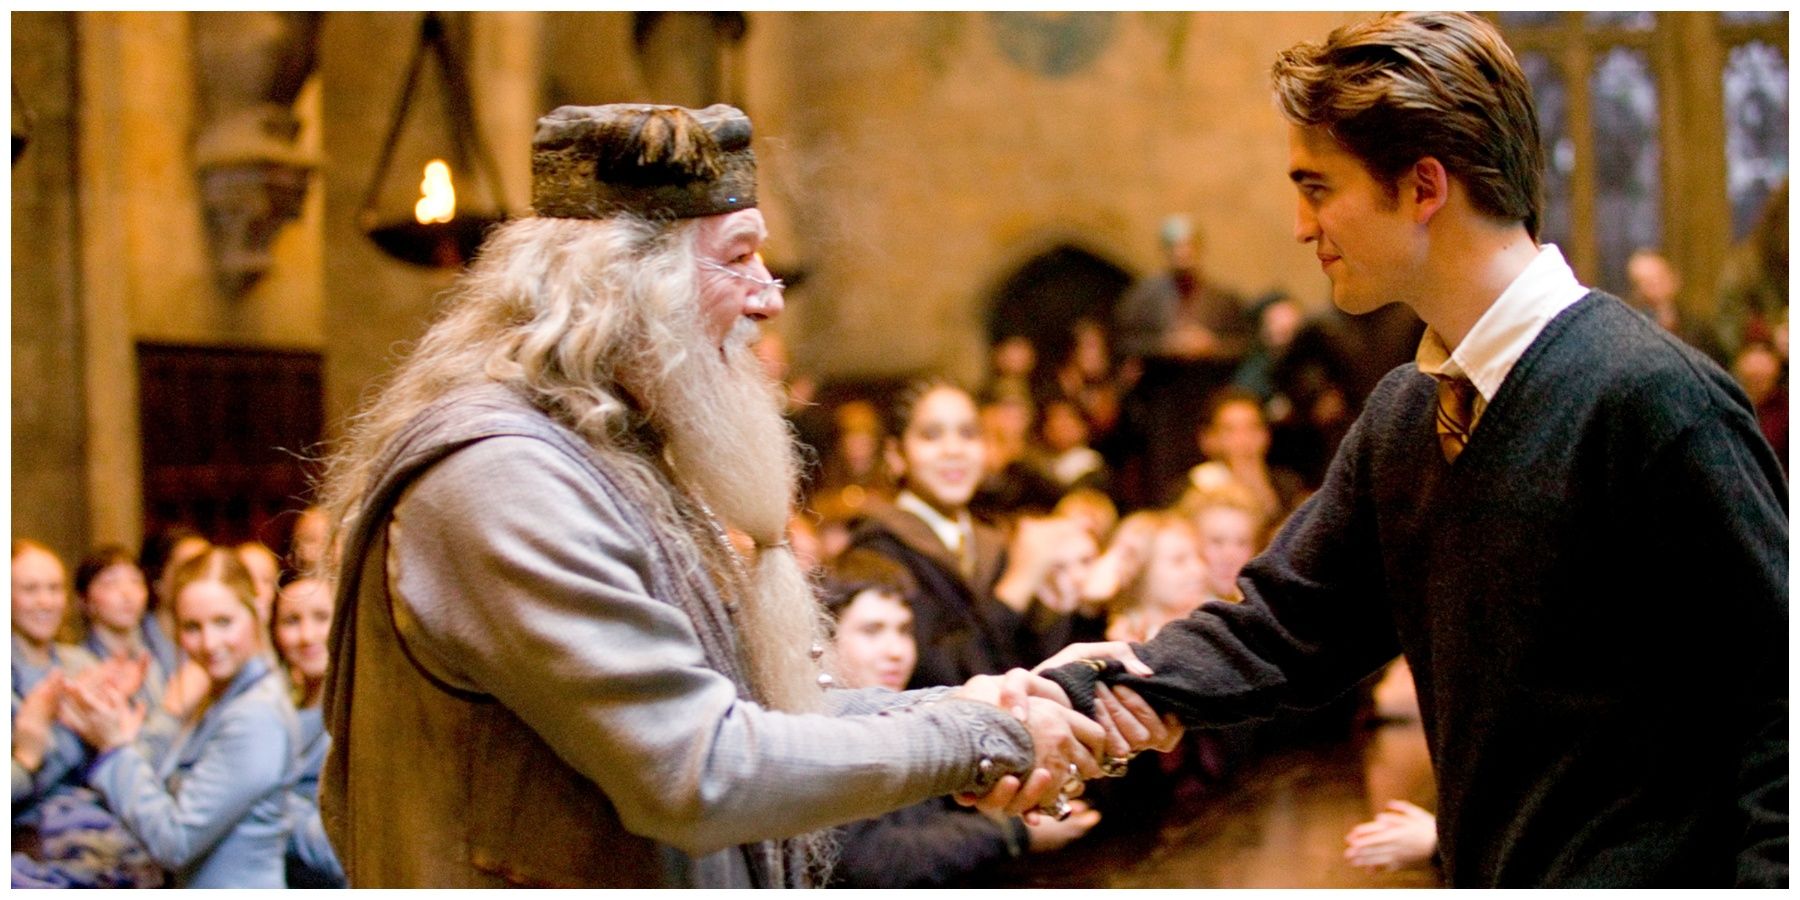 Michael Gambon as Albus Dumbledore. Robert Pattinson as Cedric Diggory.